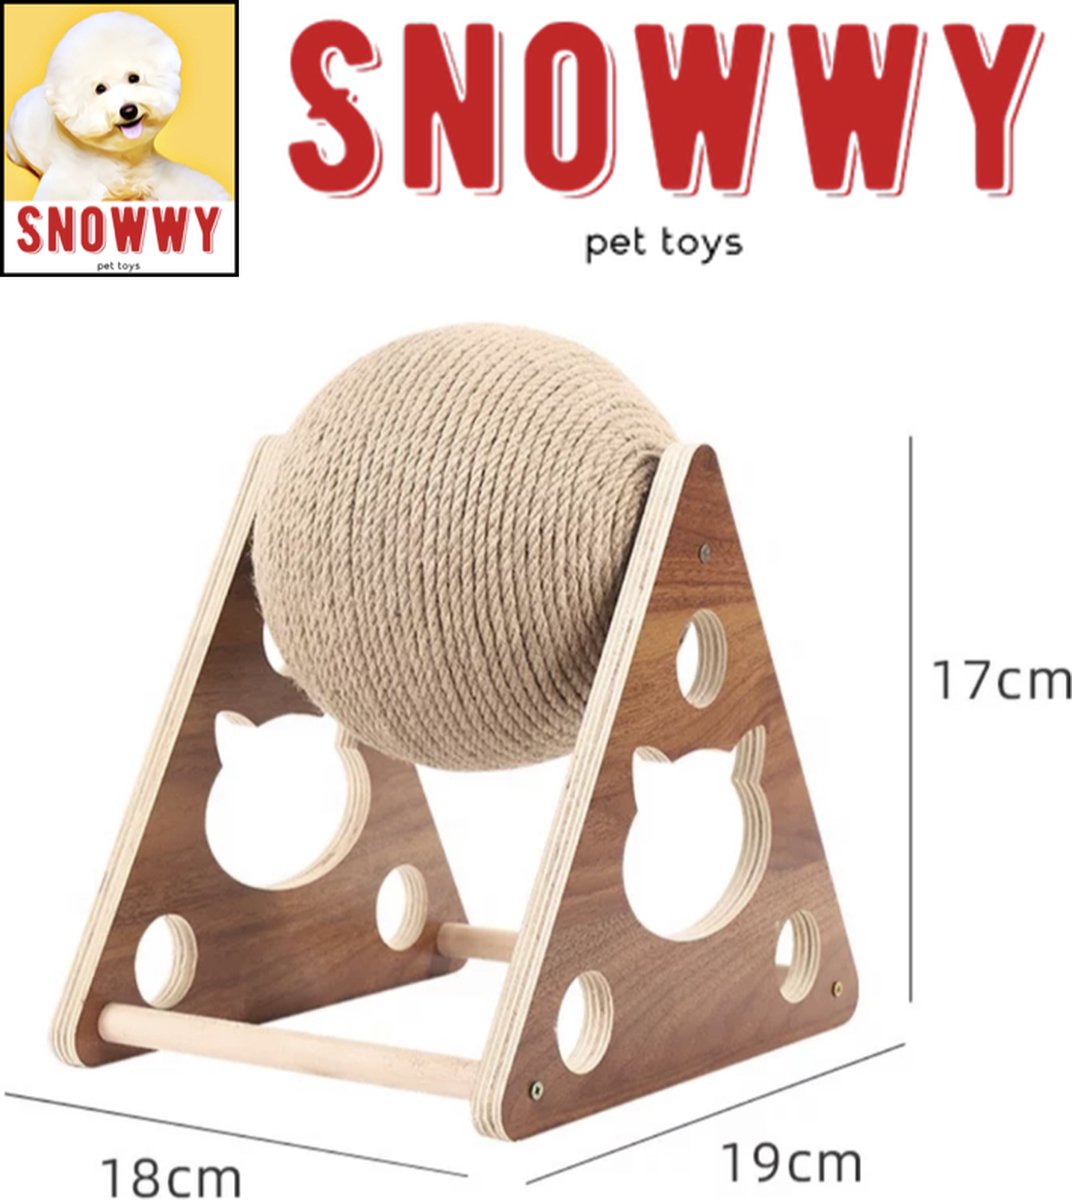 SNOWWY - Krabbal voor katten - Krabbol - Katten speelgoed - Krabplank - Kattenspeeltje - Krabmeubel - Krabbal op driehoek